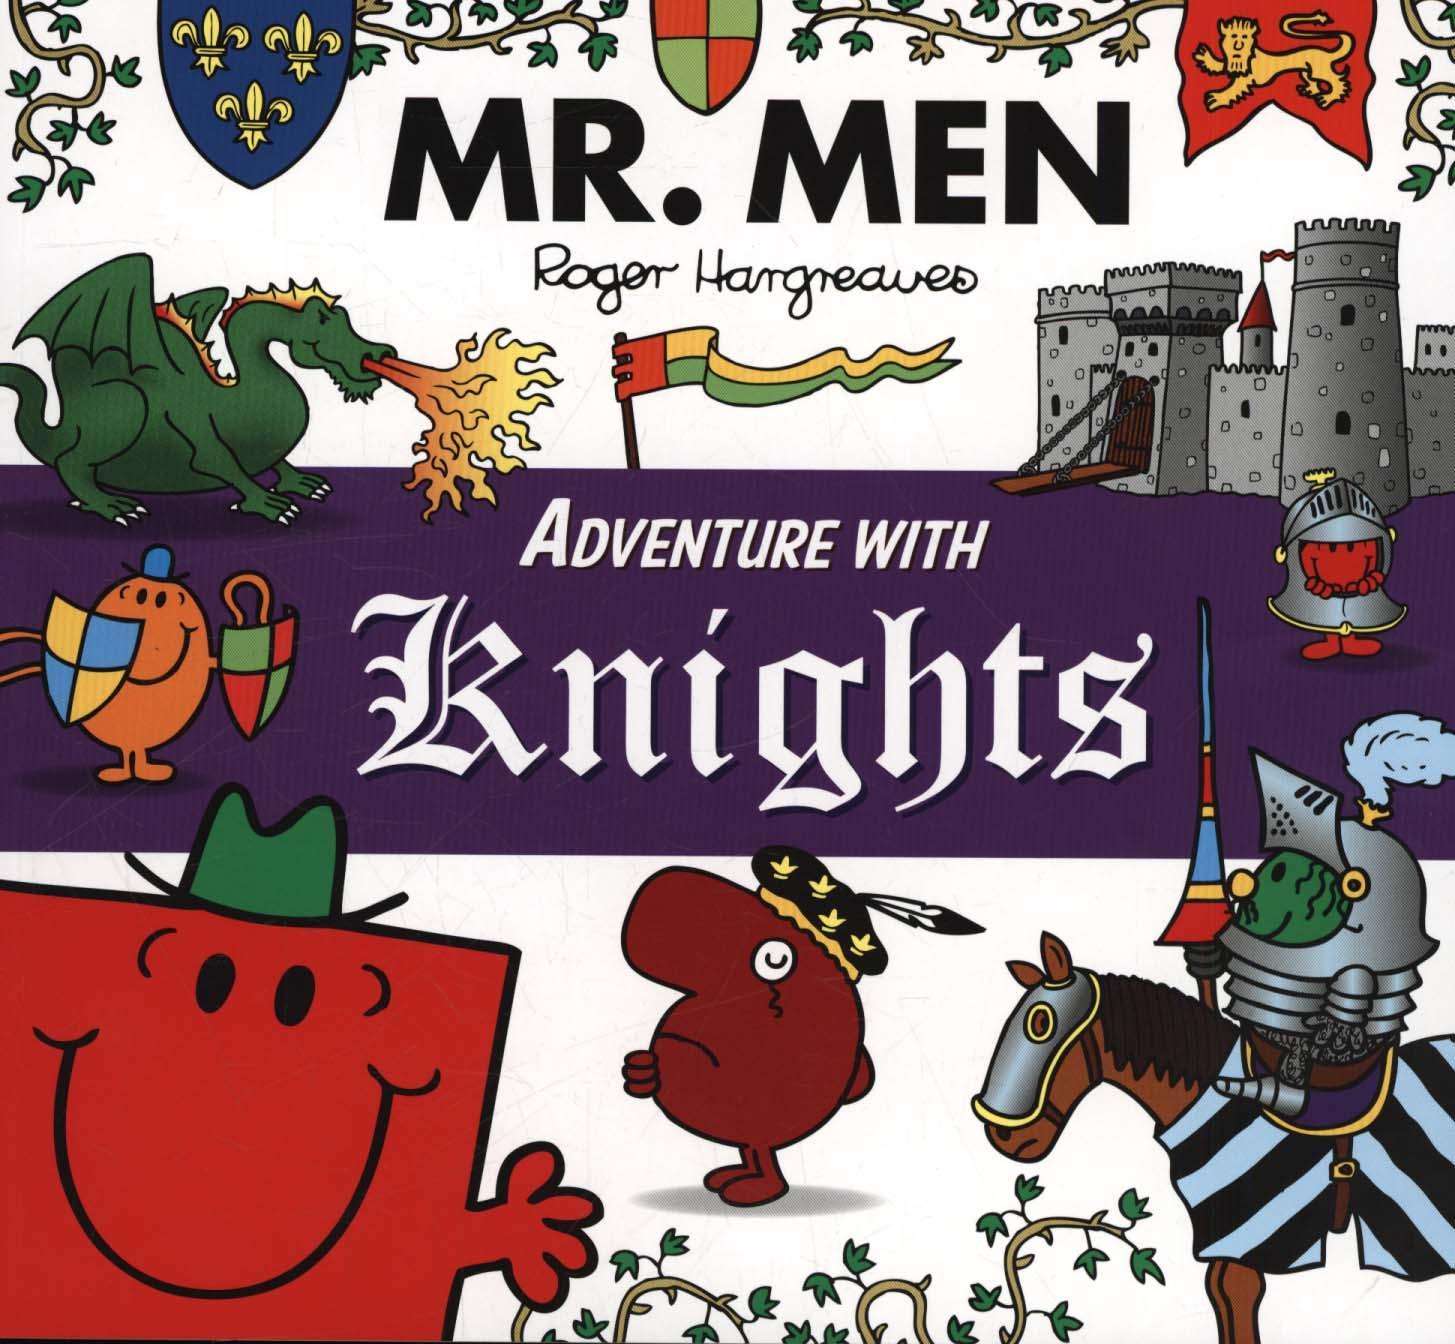 Mr. Men Adventure with Knights -  